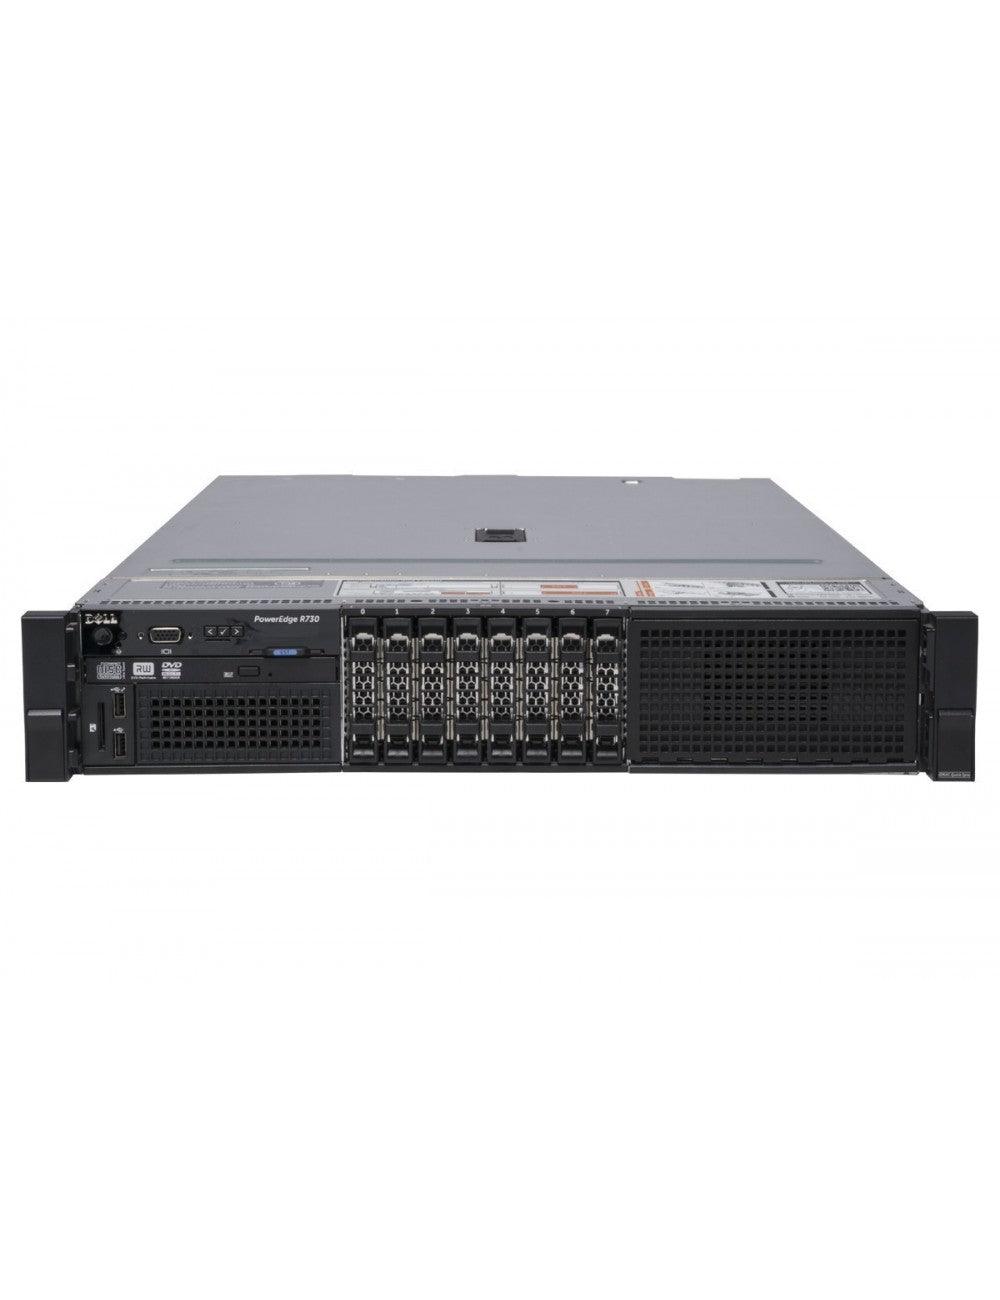 DELL POWEREDGE R730 8 x SFF Server Ricondizionato 2 x 14 Core E5-2690 V4 128GB DDR4 ECC REG, HDD 2x1.2TB Enterprise SSD SAS 2,5", H730 Raid Ctrl , RACK 1U, 4xLAN1000, 2x495W PSU